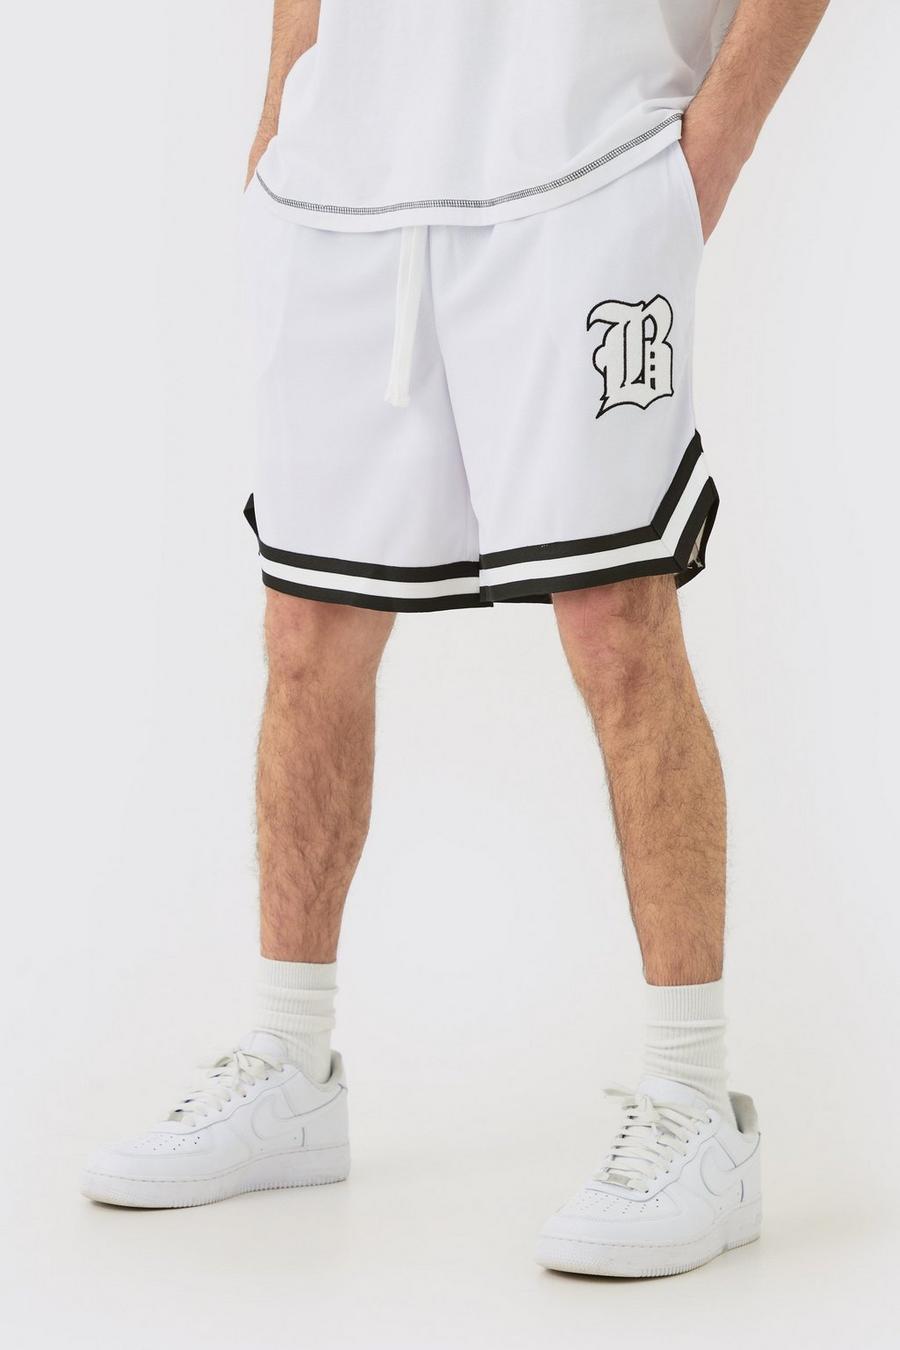 White Loose Fit B Applique Mesh Short Length Basketball Short